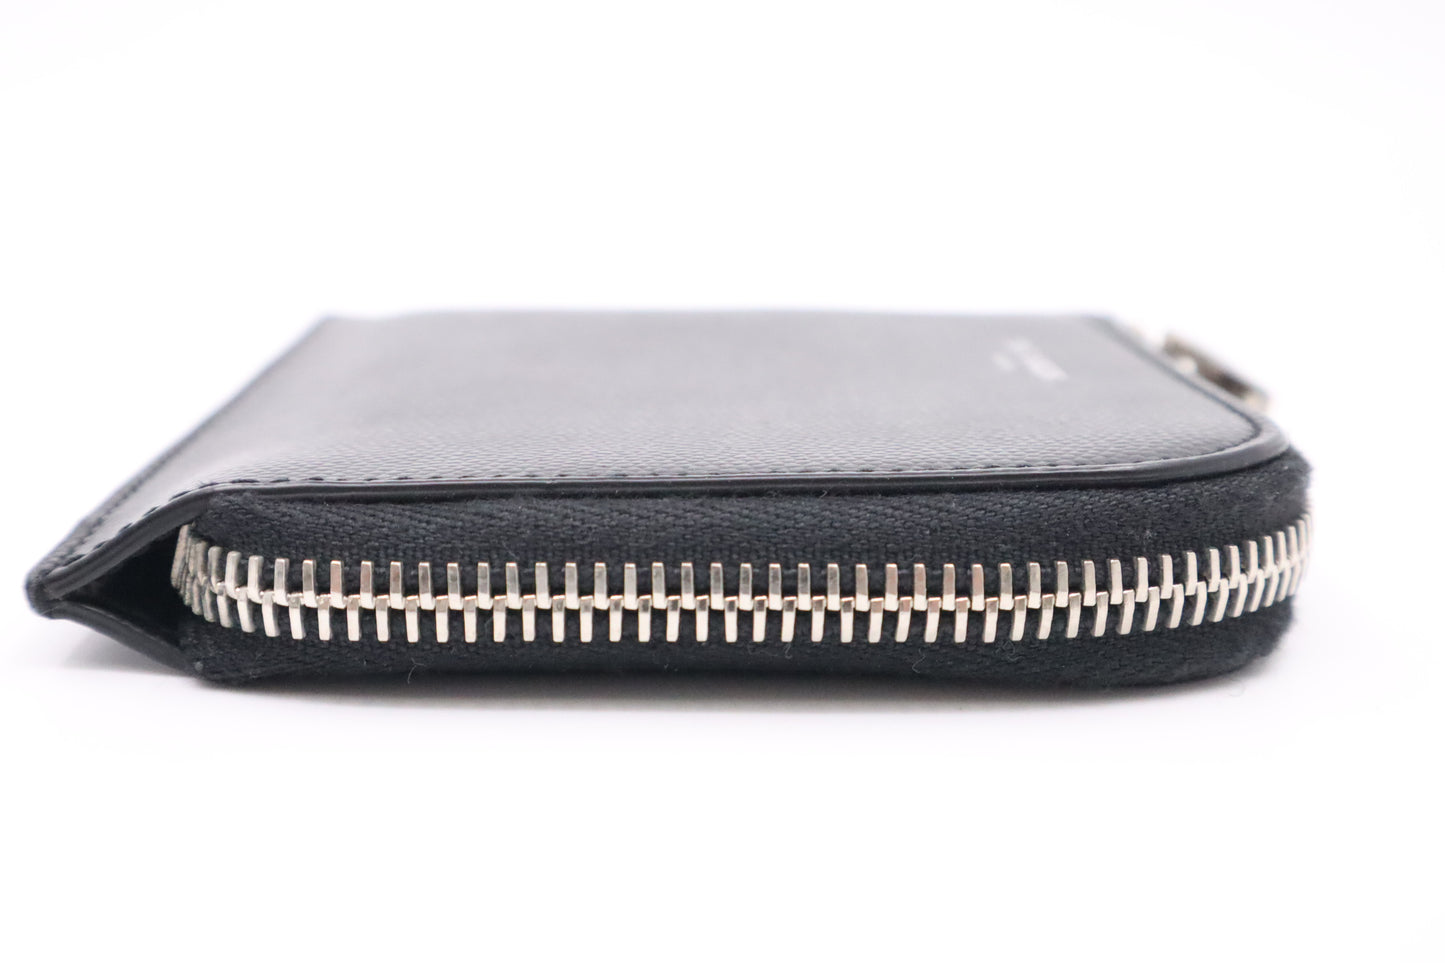 YSL Saint Laurent Zippy Card Case in Black Pebbled Leather